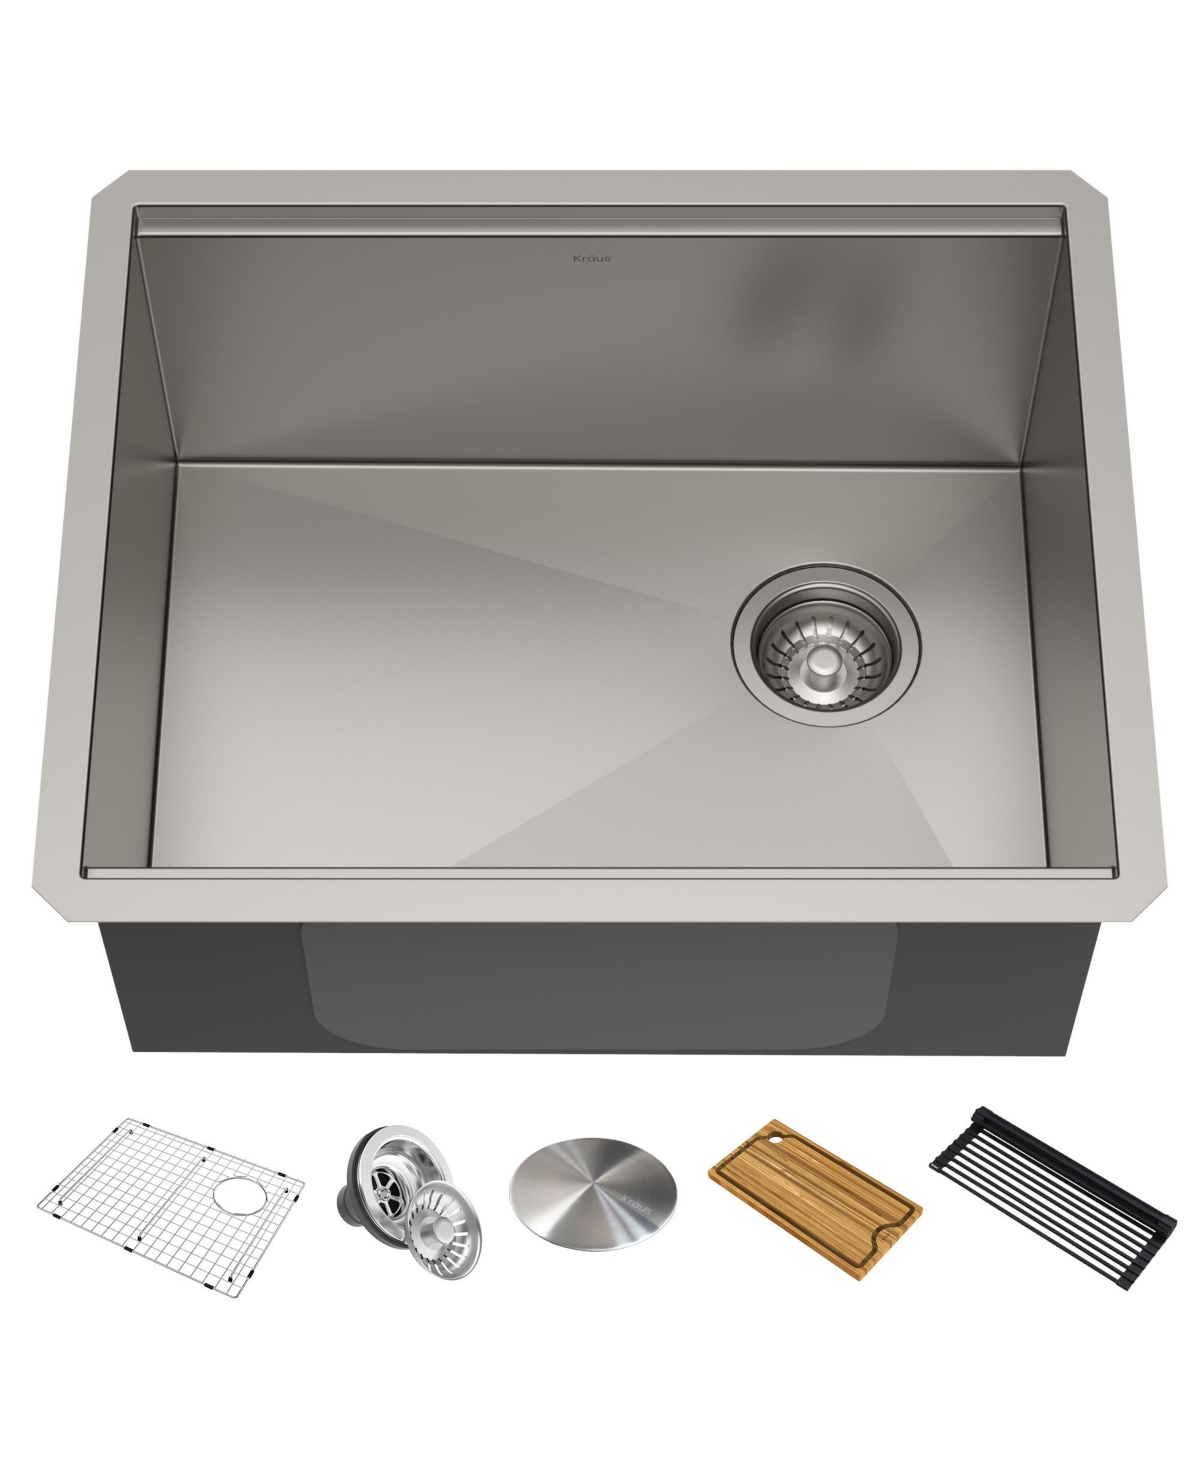 Kore 23 in. Workstation Undermount 16 Gauge Single Bowl Stainless Steel Kitchen Sink with Accessories - Stainless steel